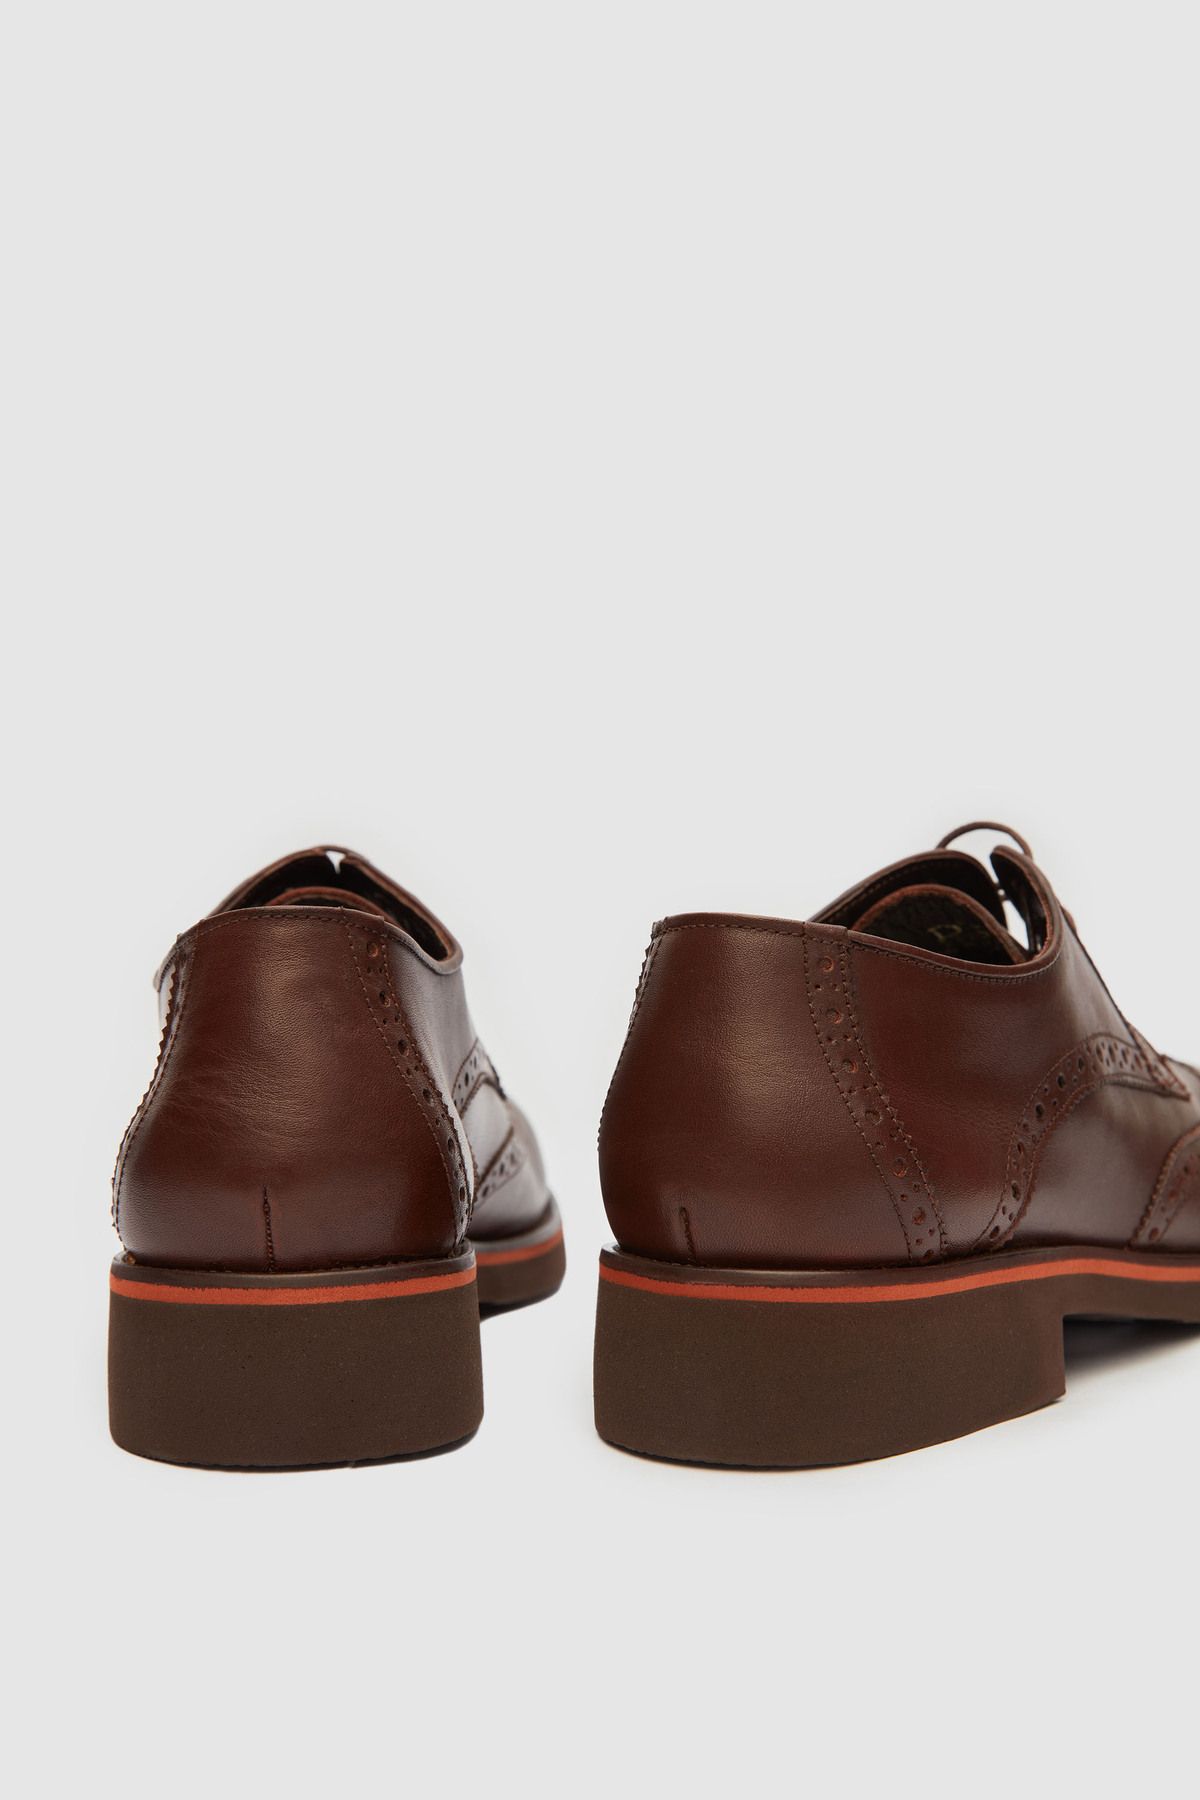 D'S Damat کفش های الگوی کلاسیک قهوه ای DS داماد